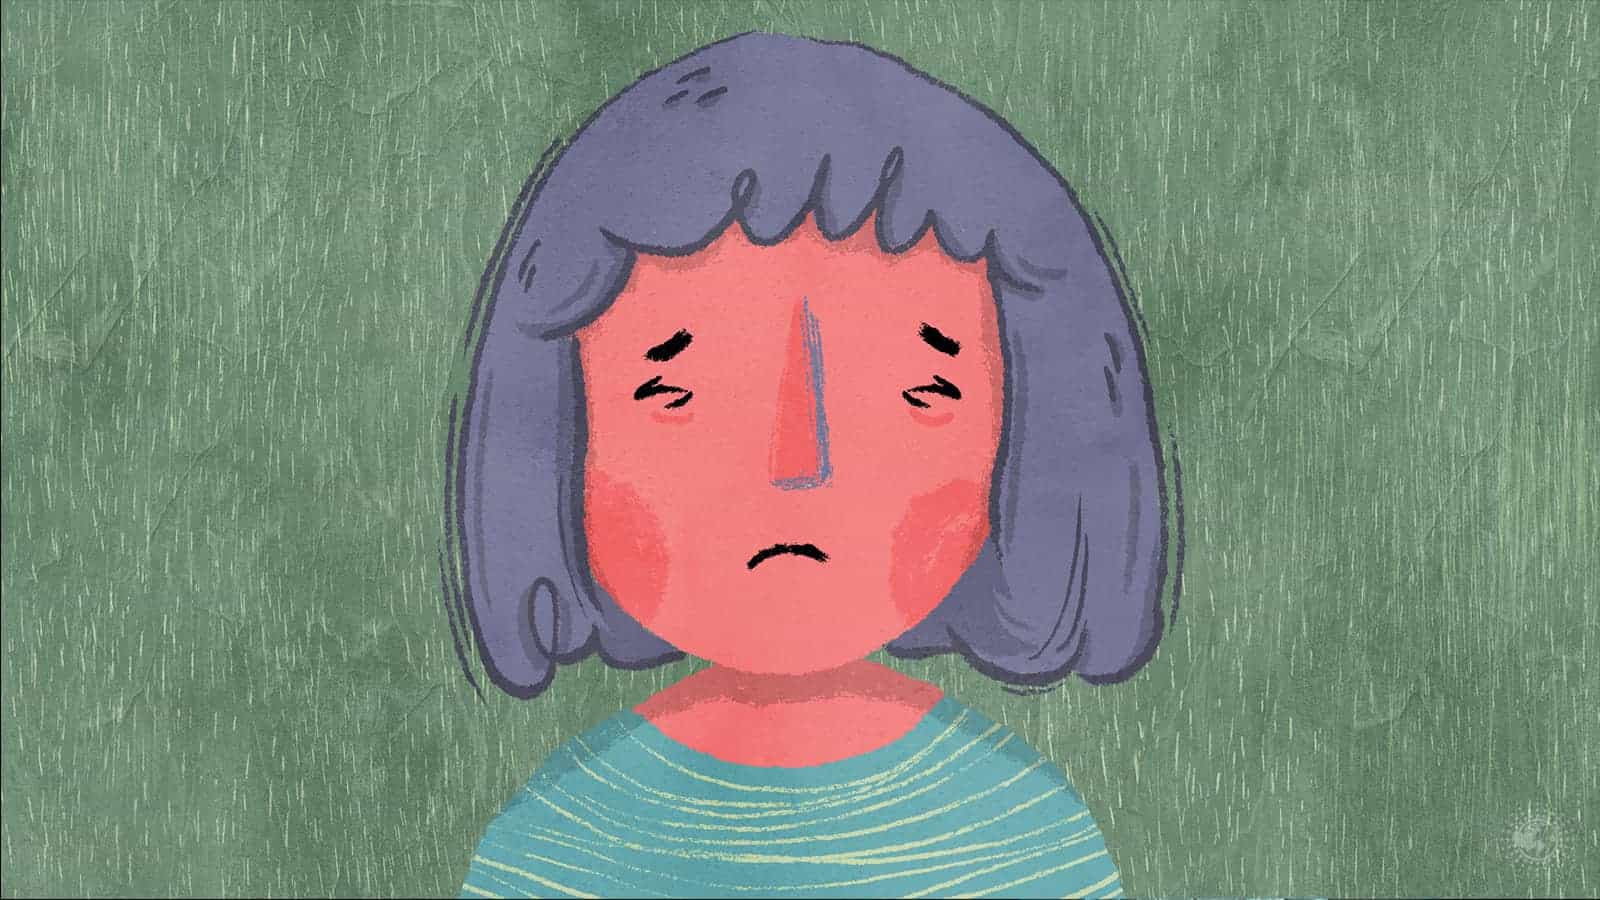 Child Psychologists Share 9 Symptoms of Depression in Children